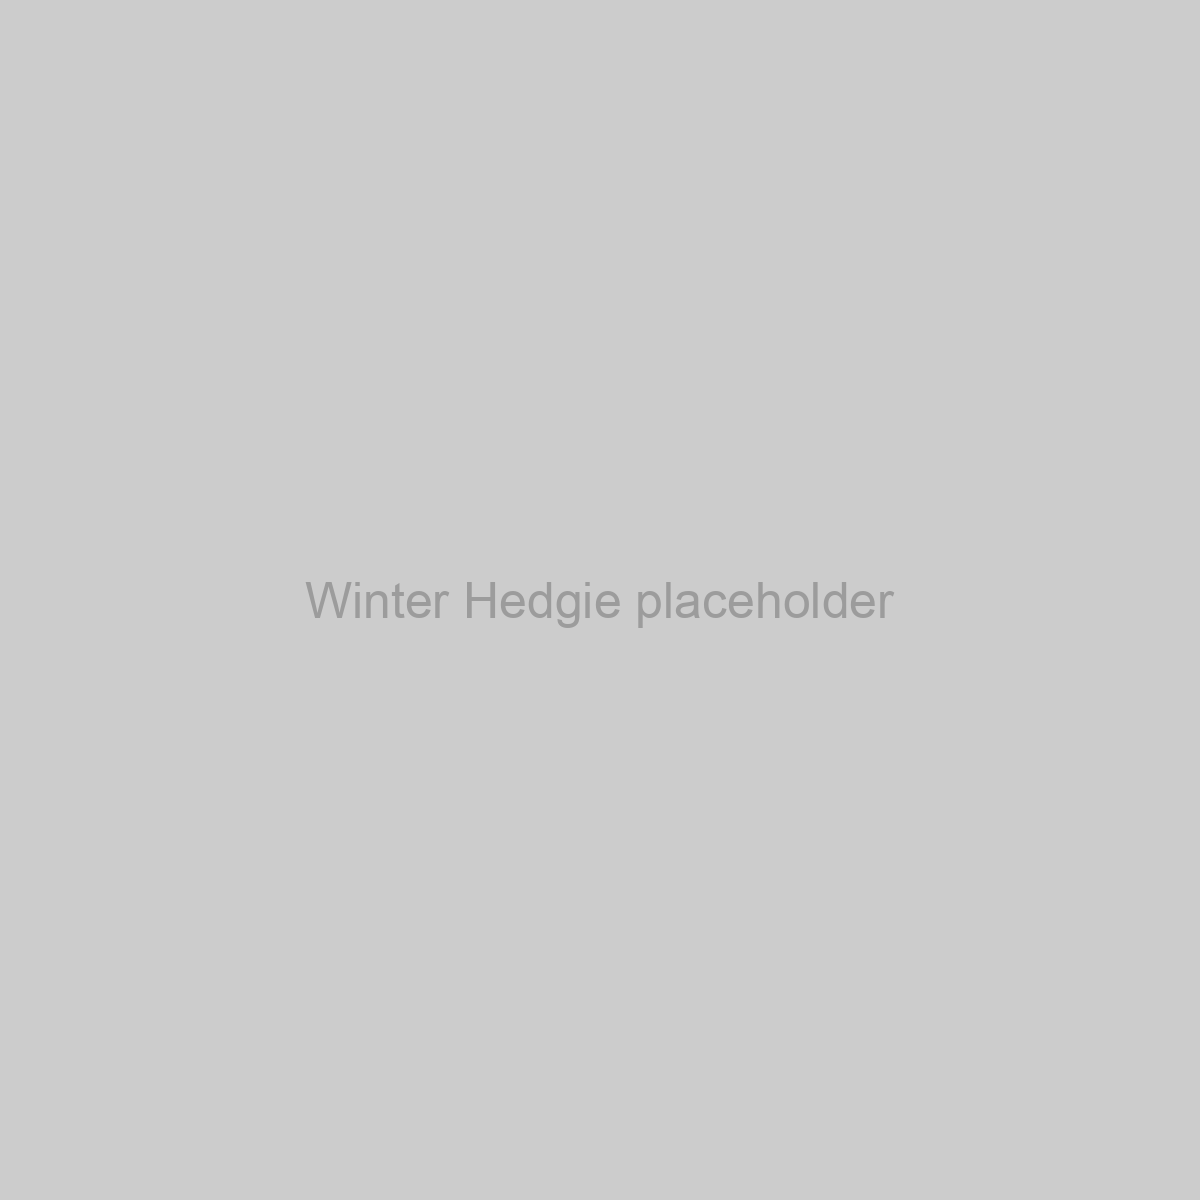 Winter Hedgie Placeholder Image